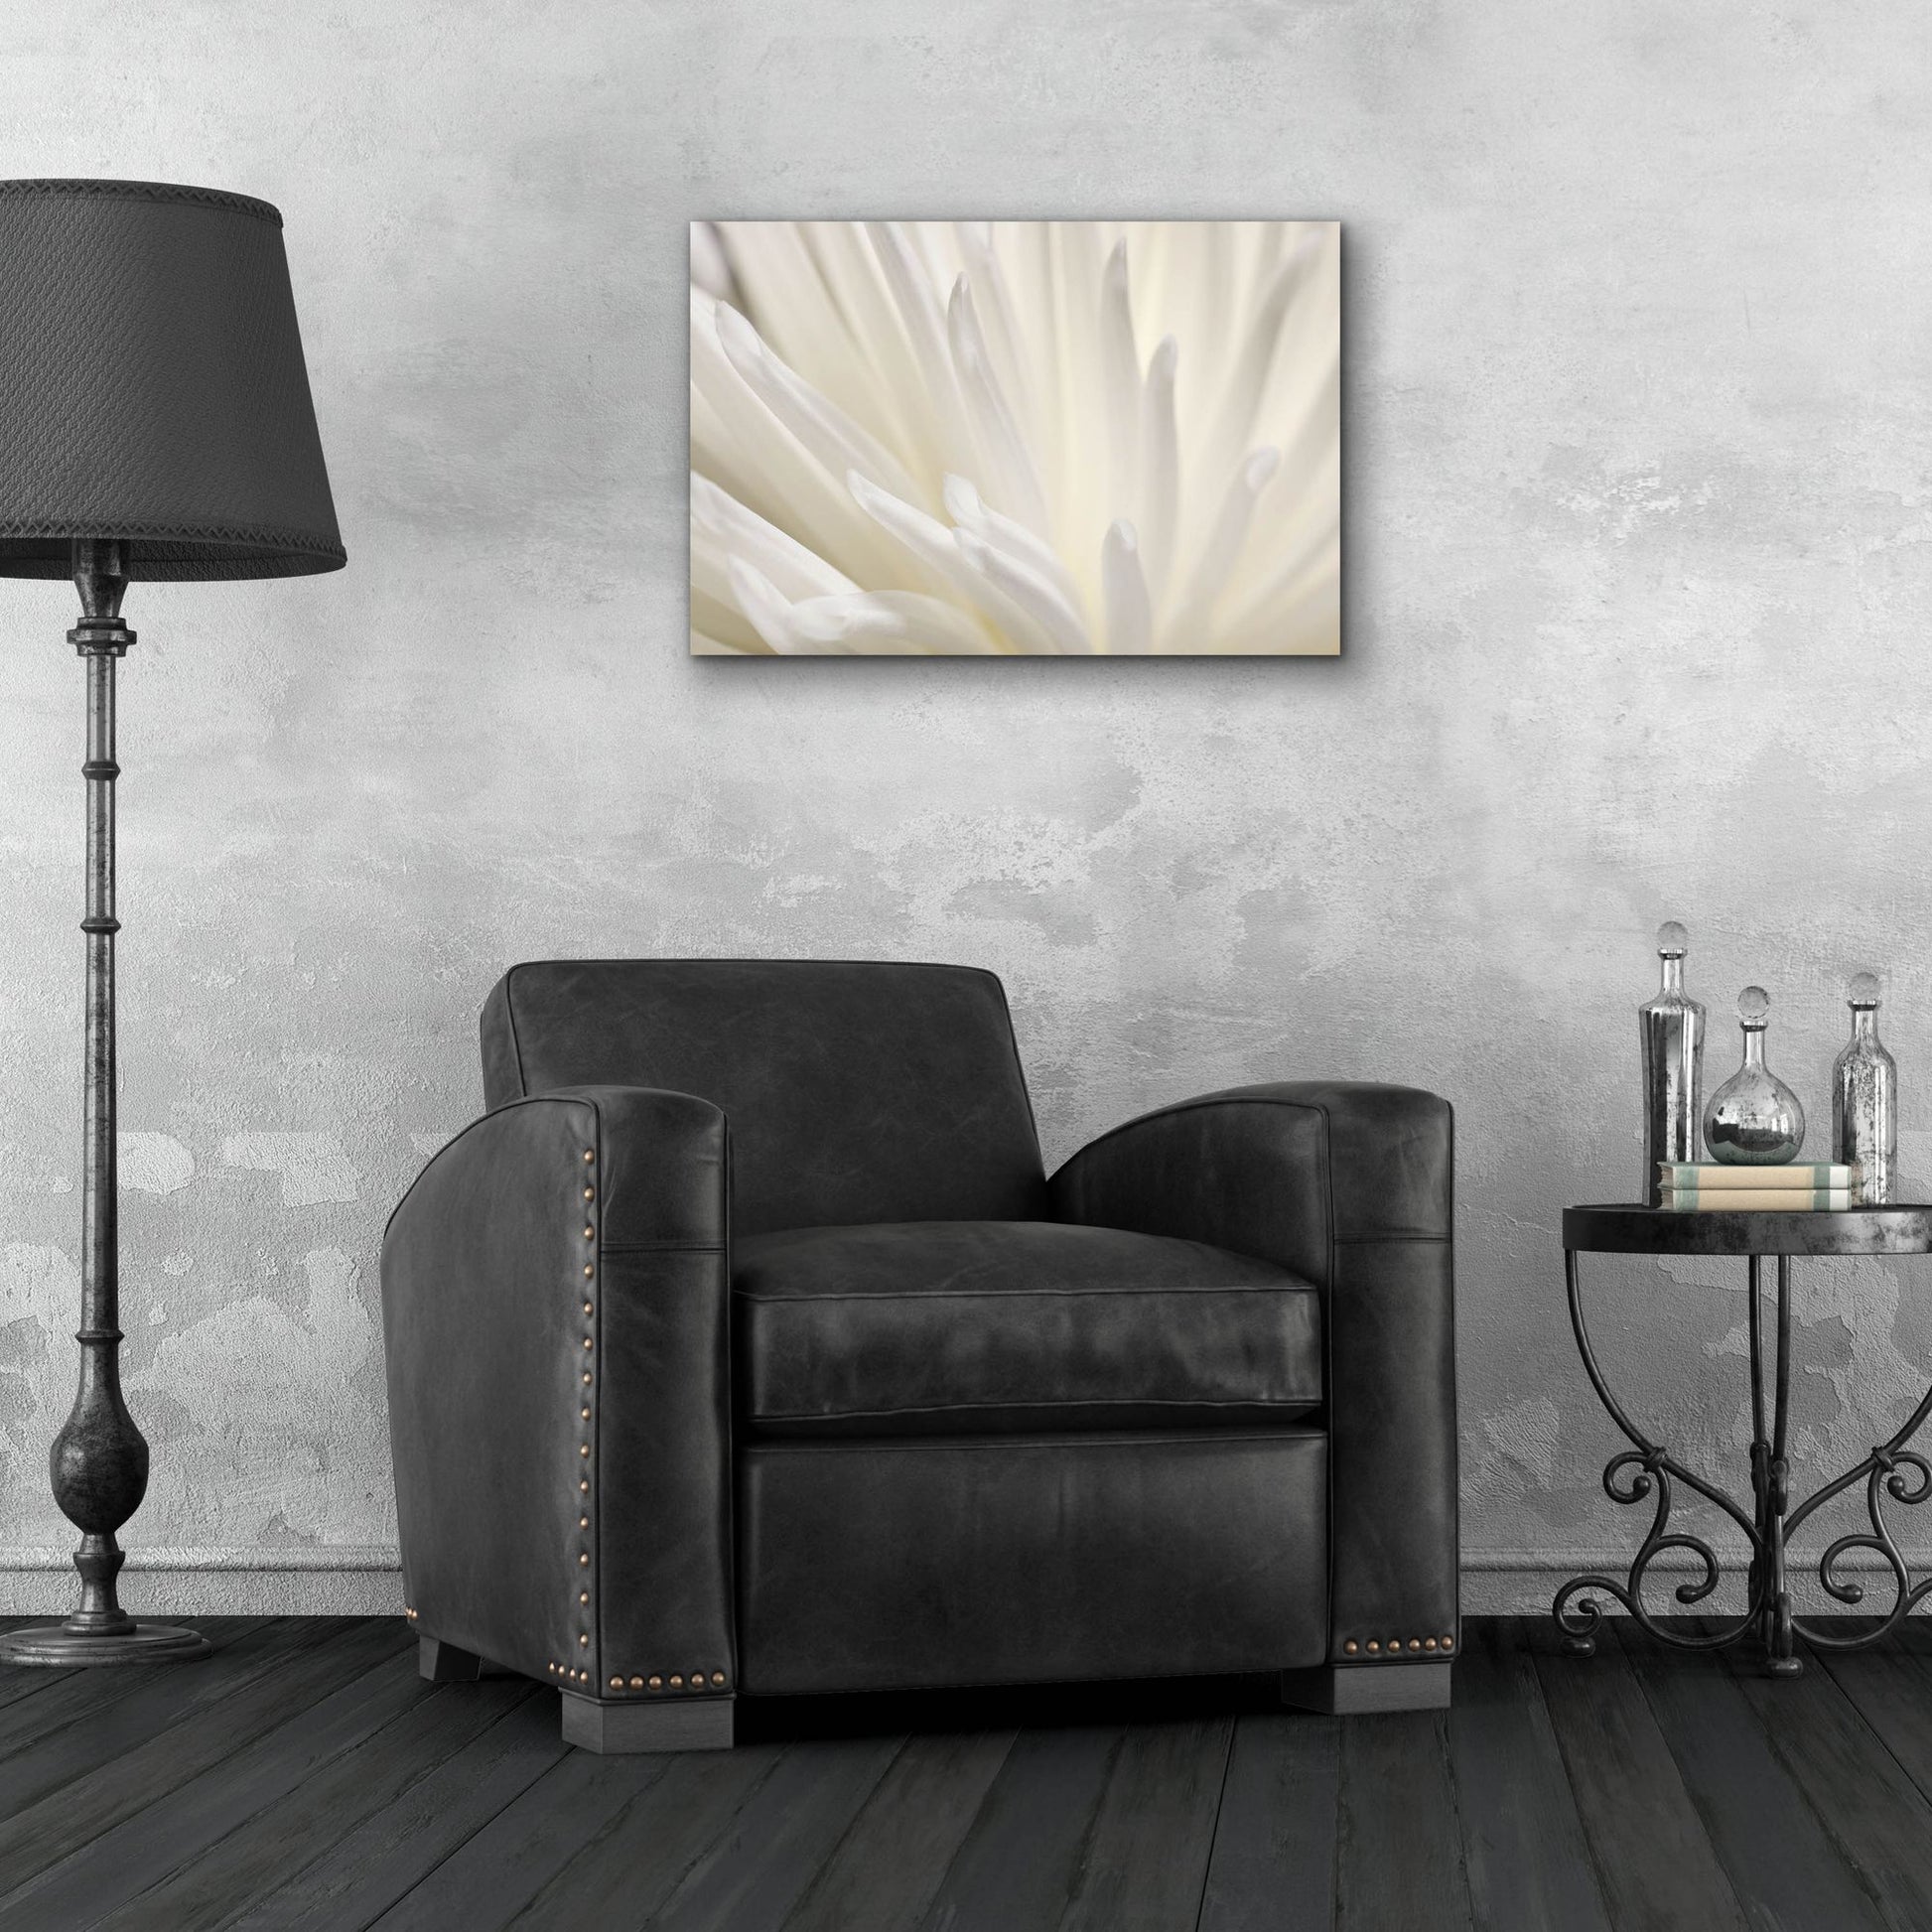 Epic Art 'White Flower' by Photoinc Studio, Acrylic Glass Wall Art,24x16